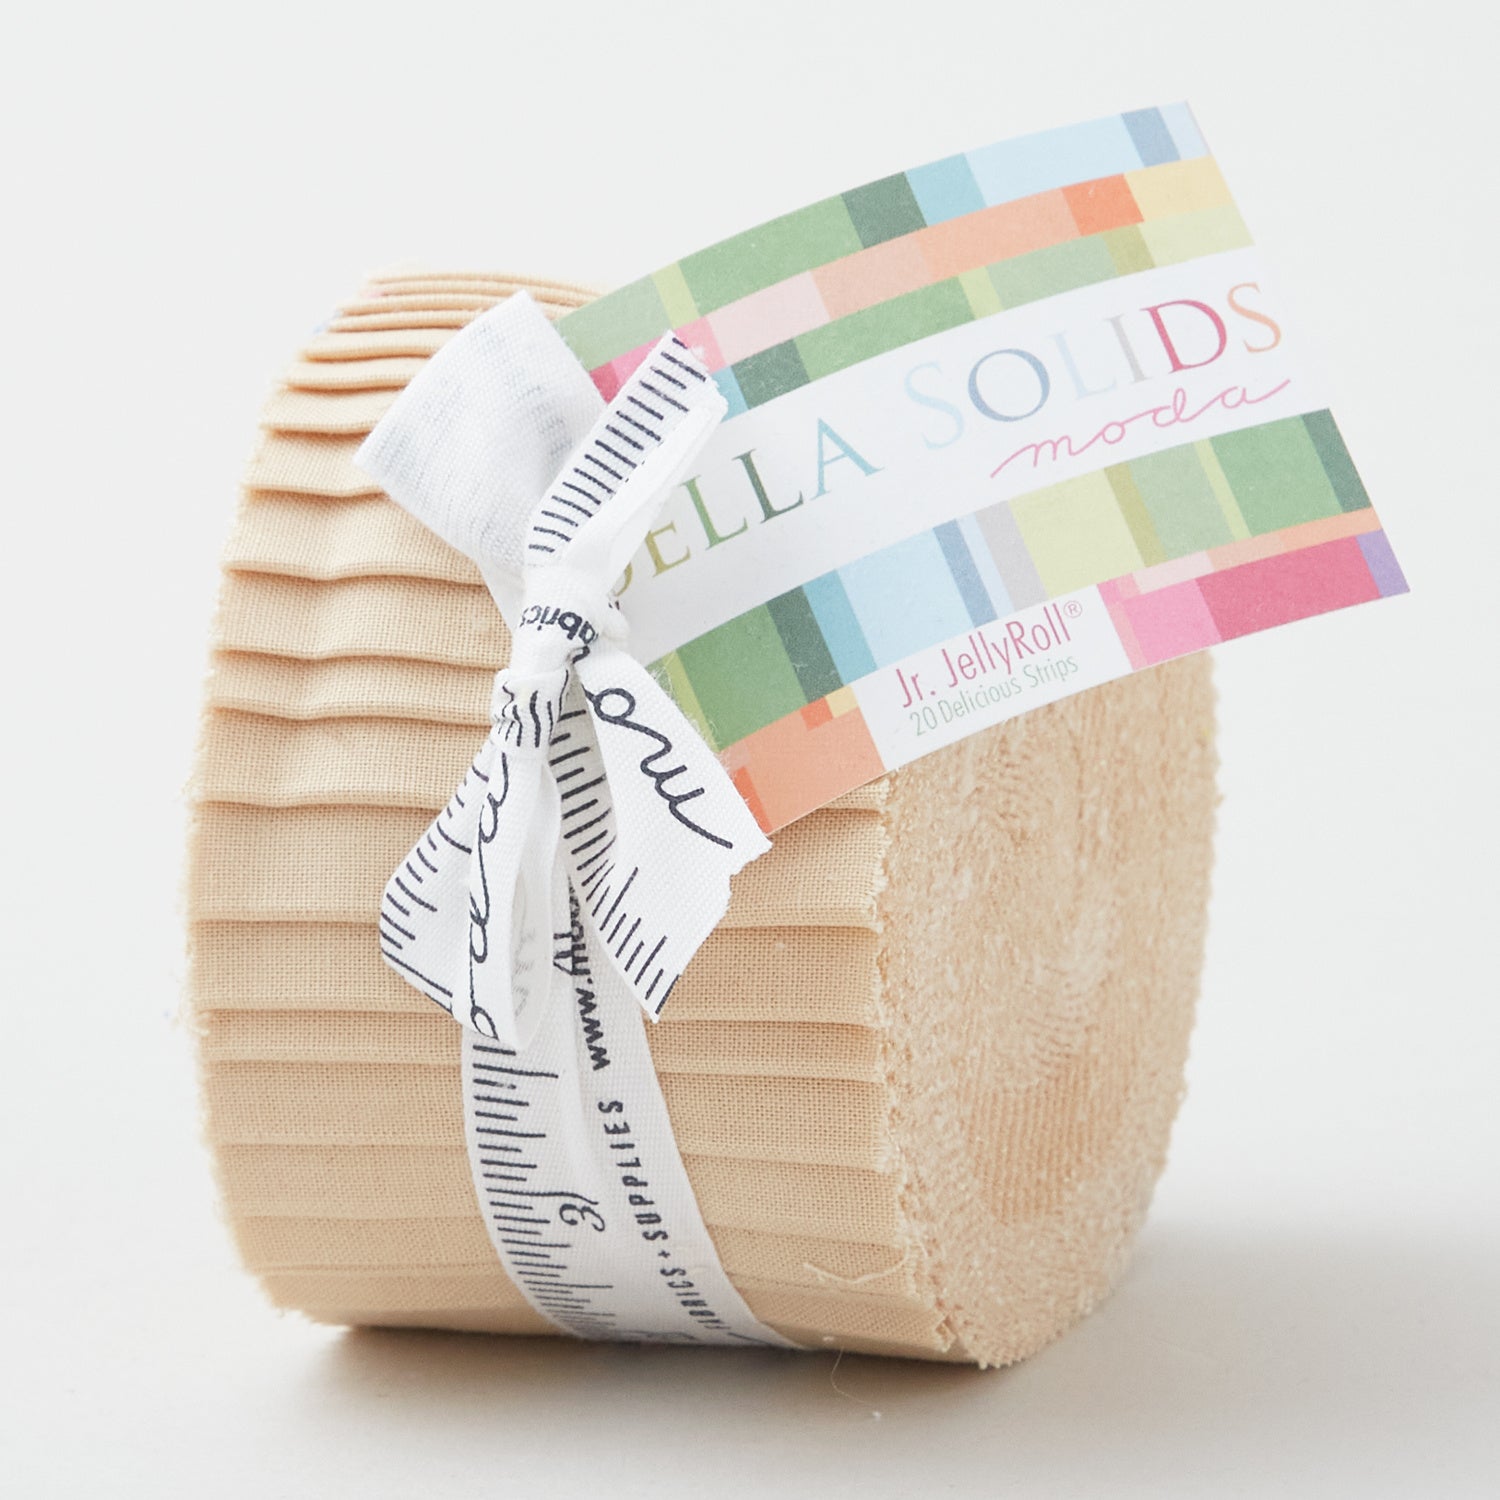 2.5 inch Rainbow Jelly Roll fabric quilting strips Moda Bella Solid – 1  Roll 